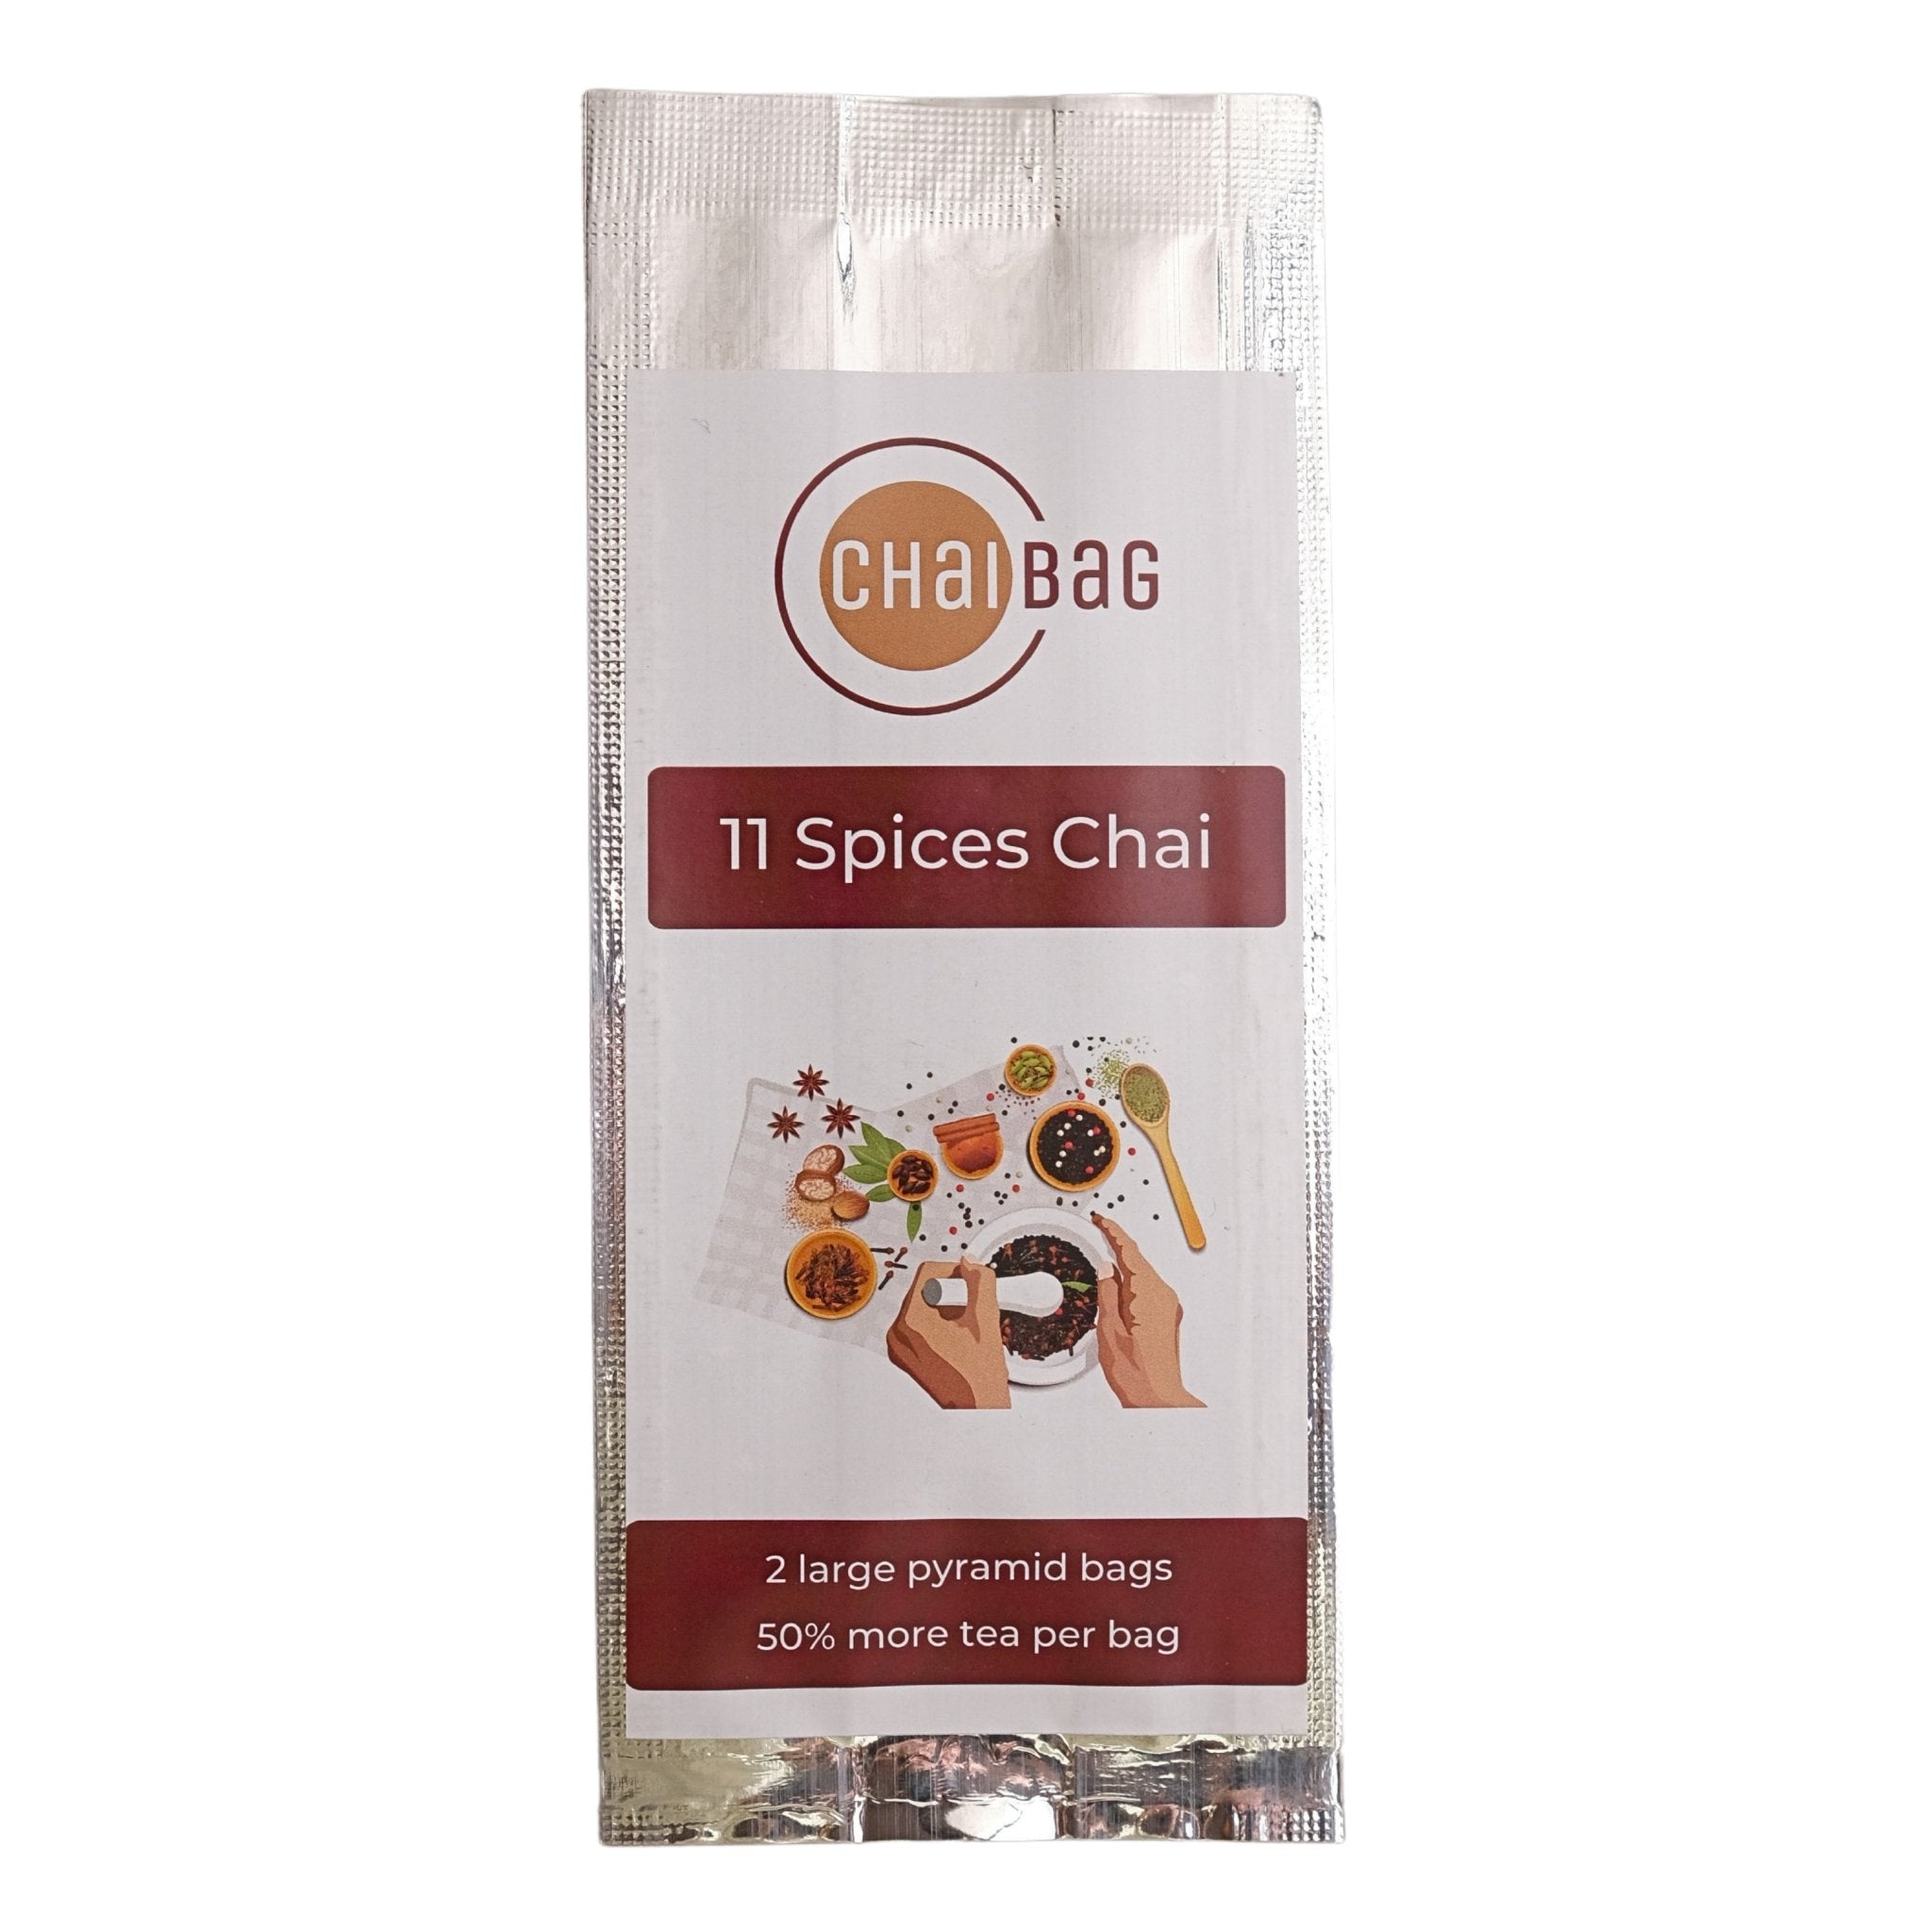 11 Spices Chai Sample - ChaiBag